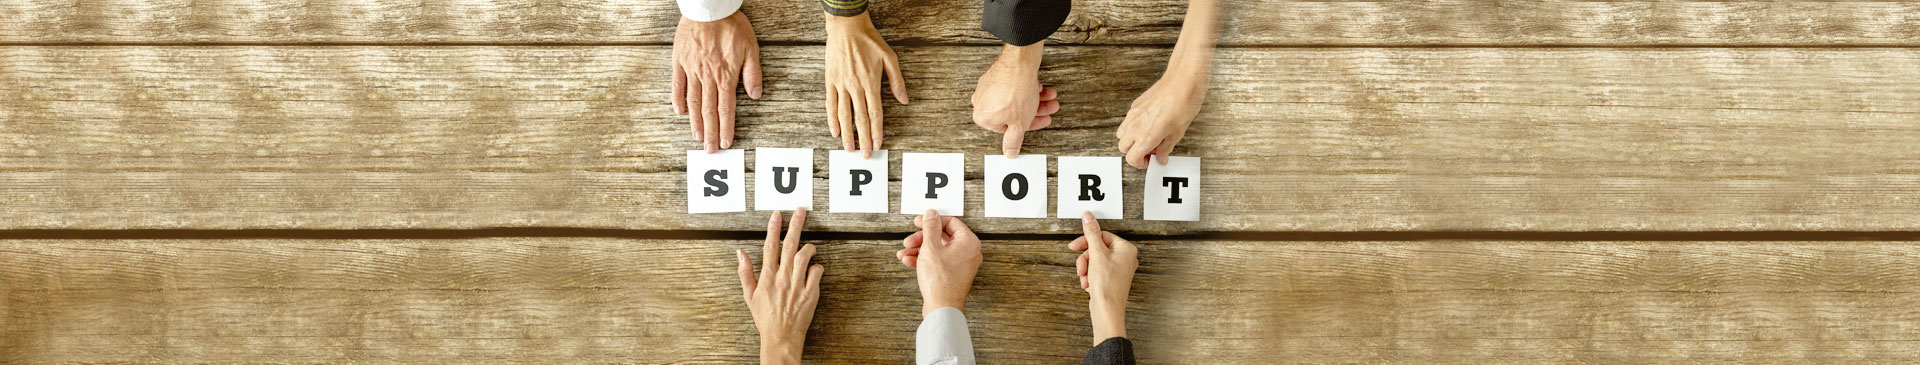 customer_support_banner